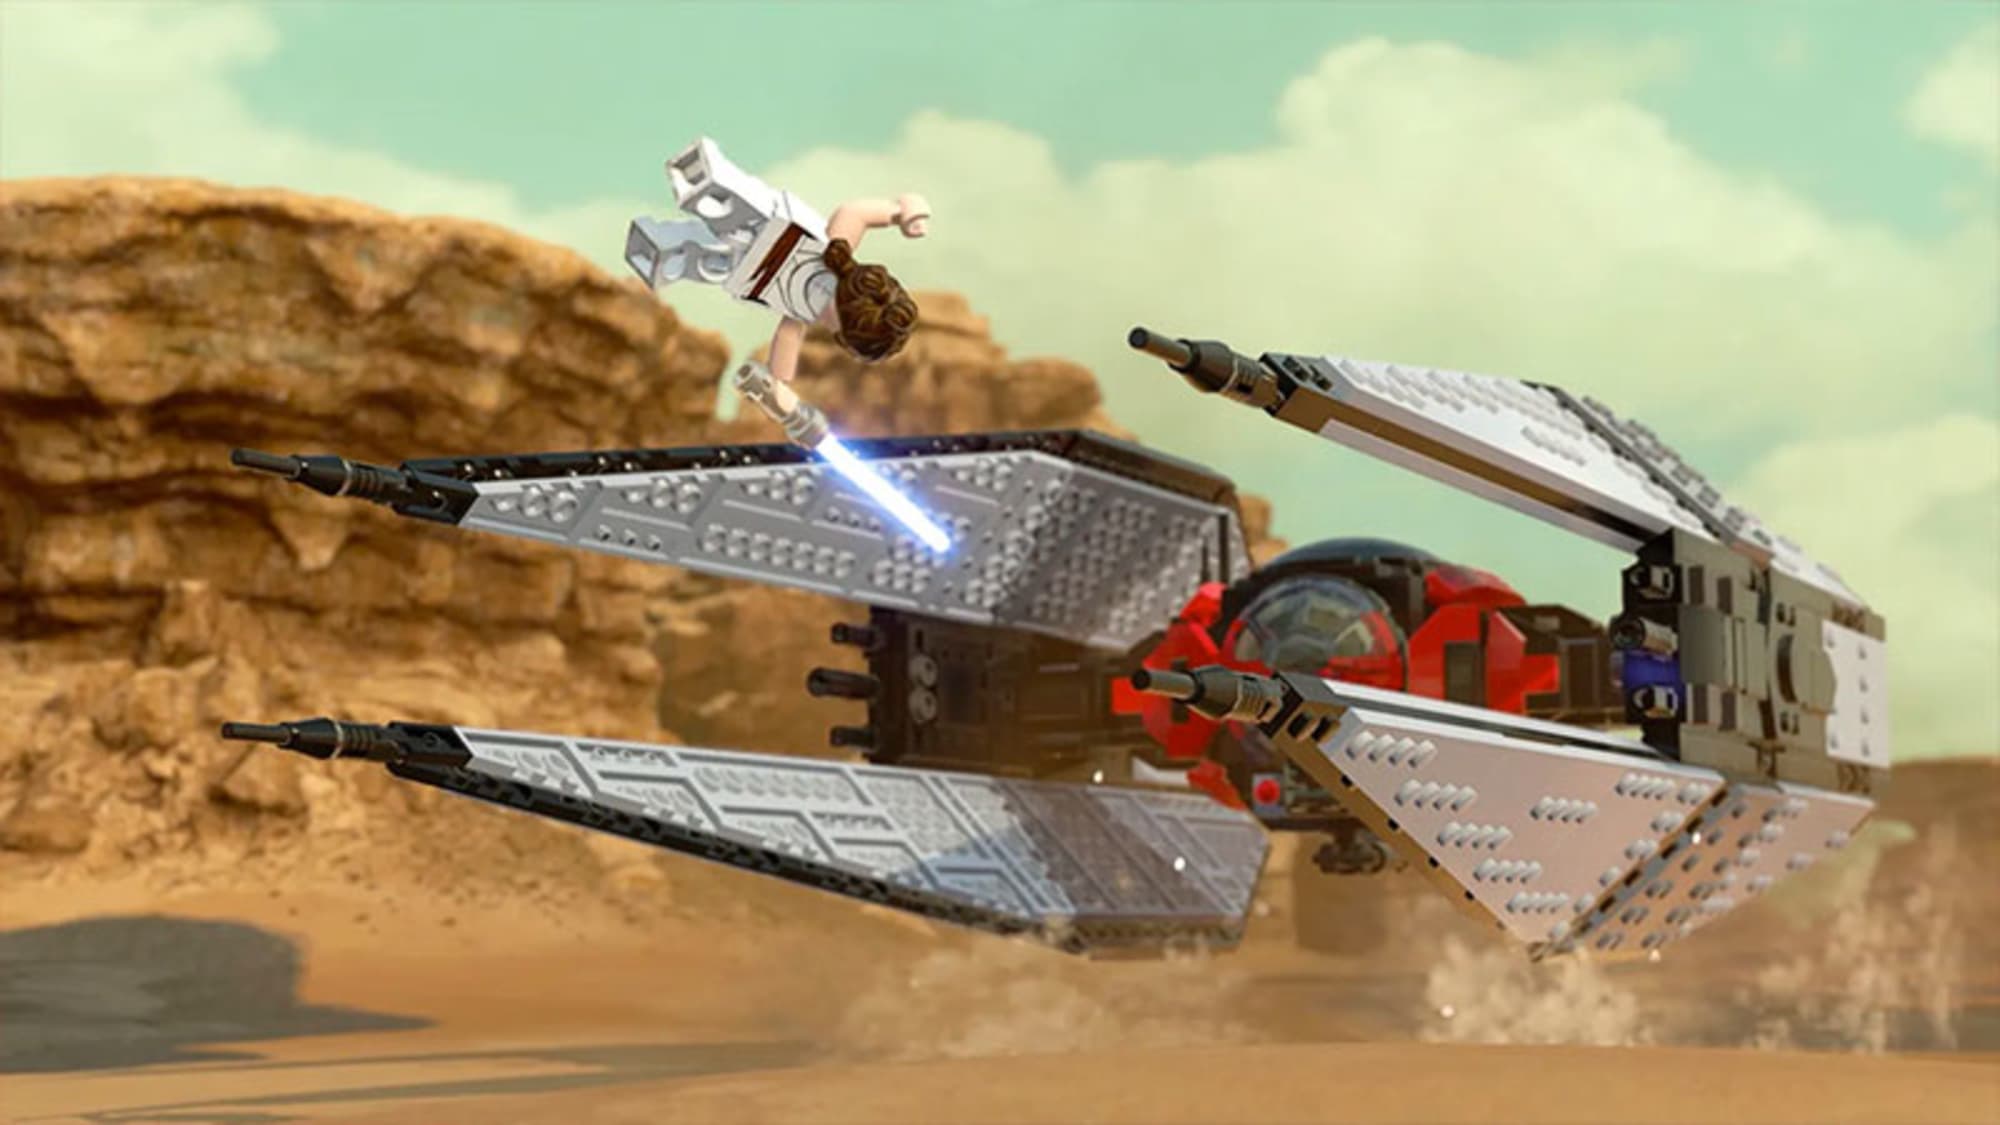 LEGO Star Wars: The Skywalker Saga tips